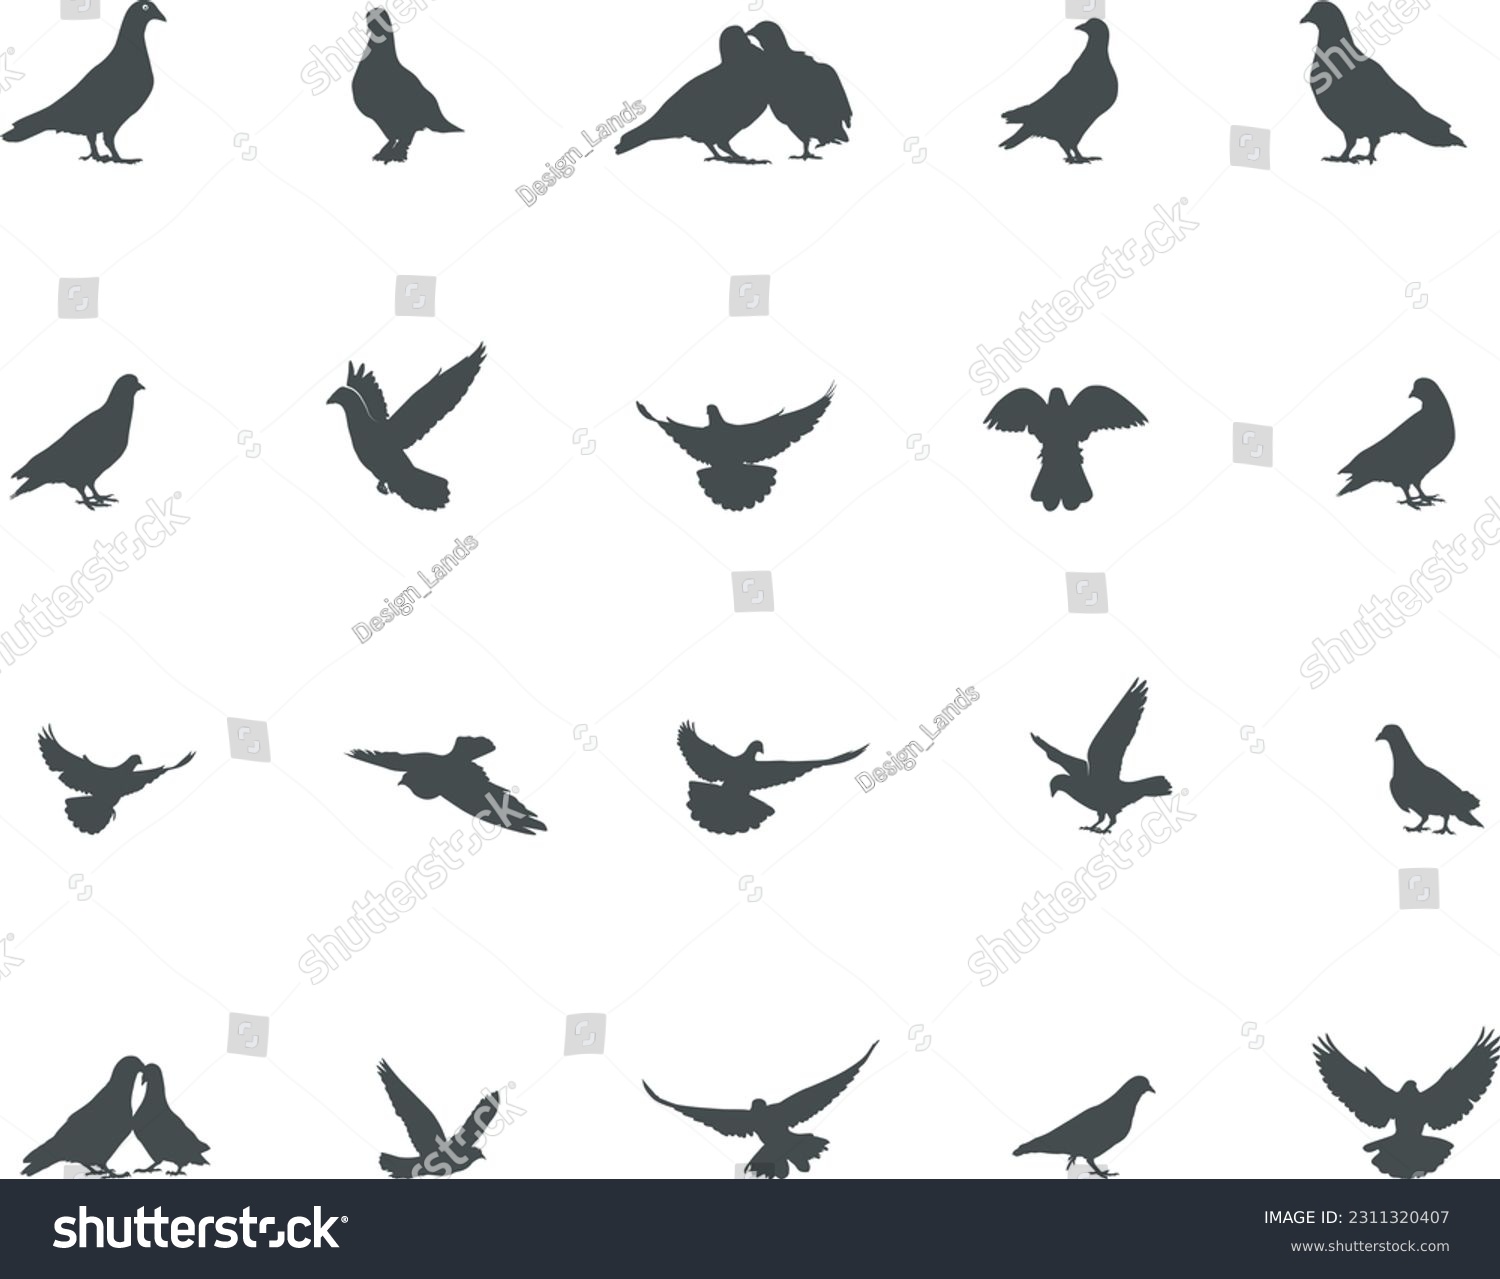 SVG of Pigeon silhouette, Pigeon SVG, Pigeon vector illustration, Pigeon bird silhouette. svg